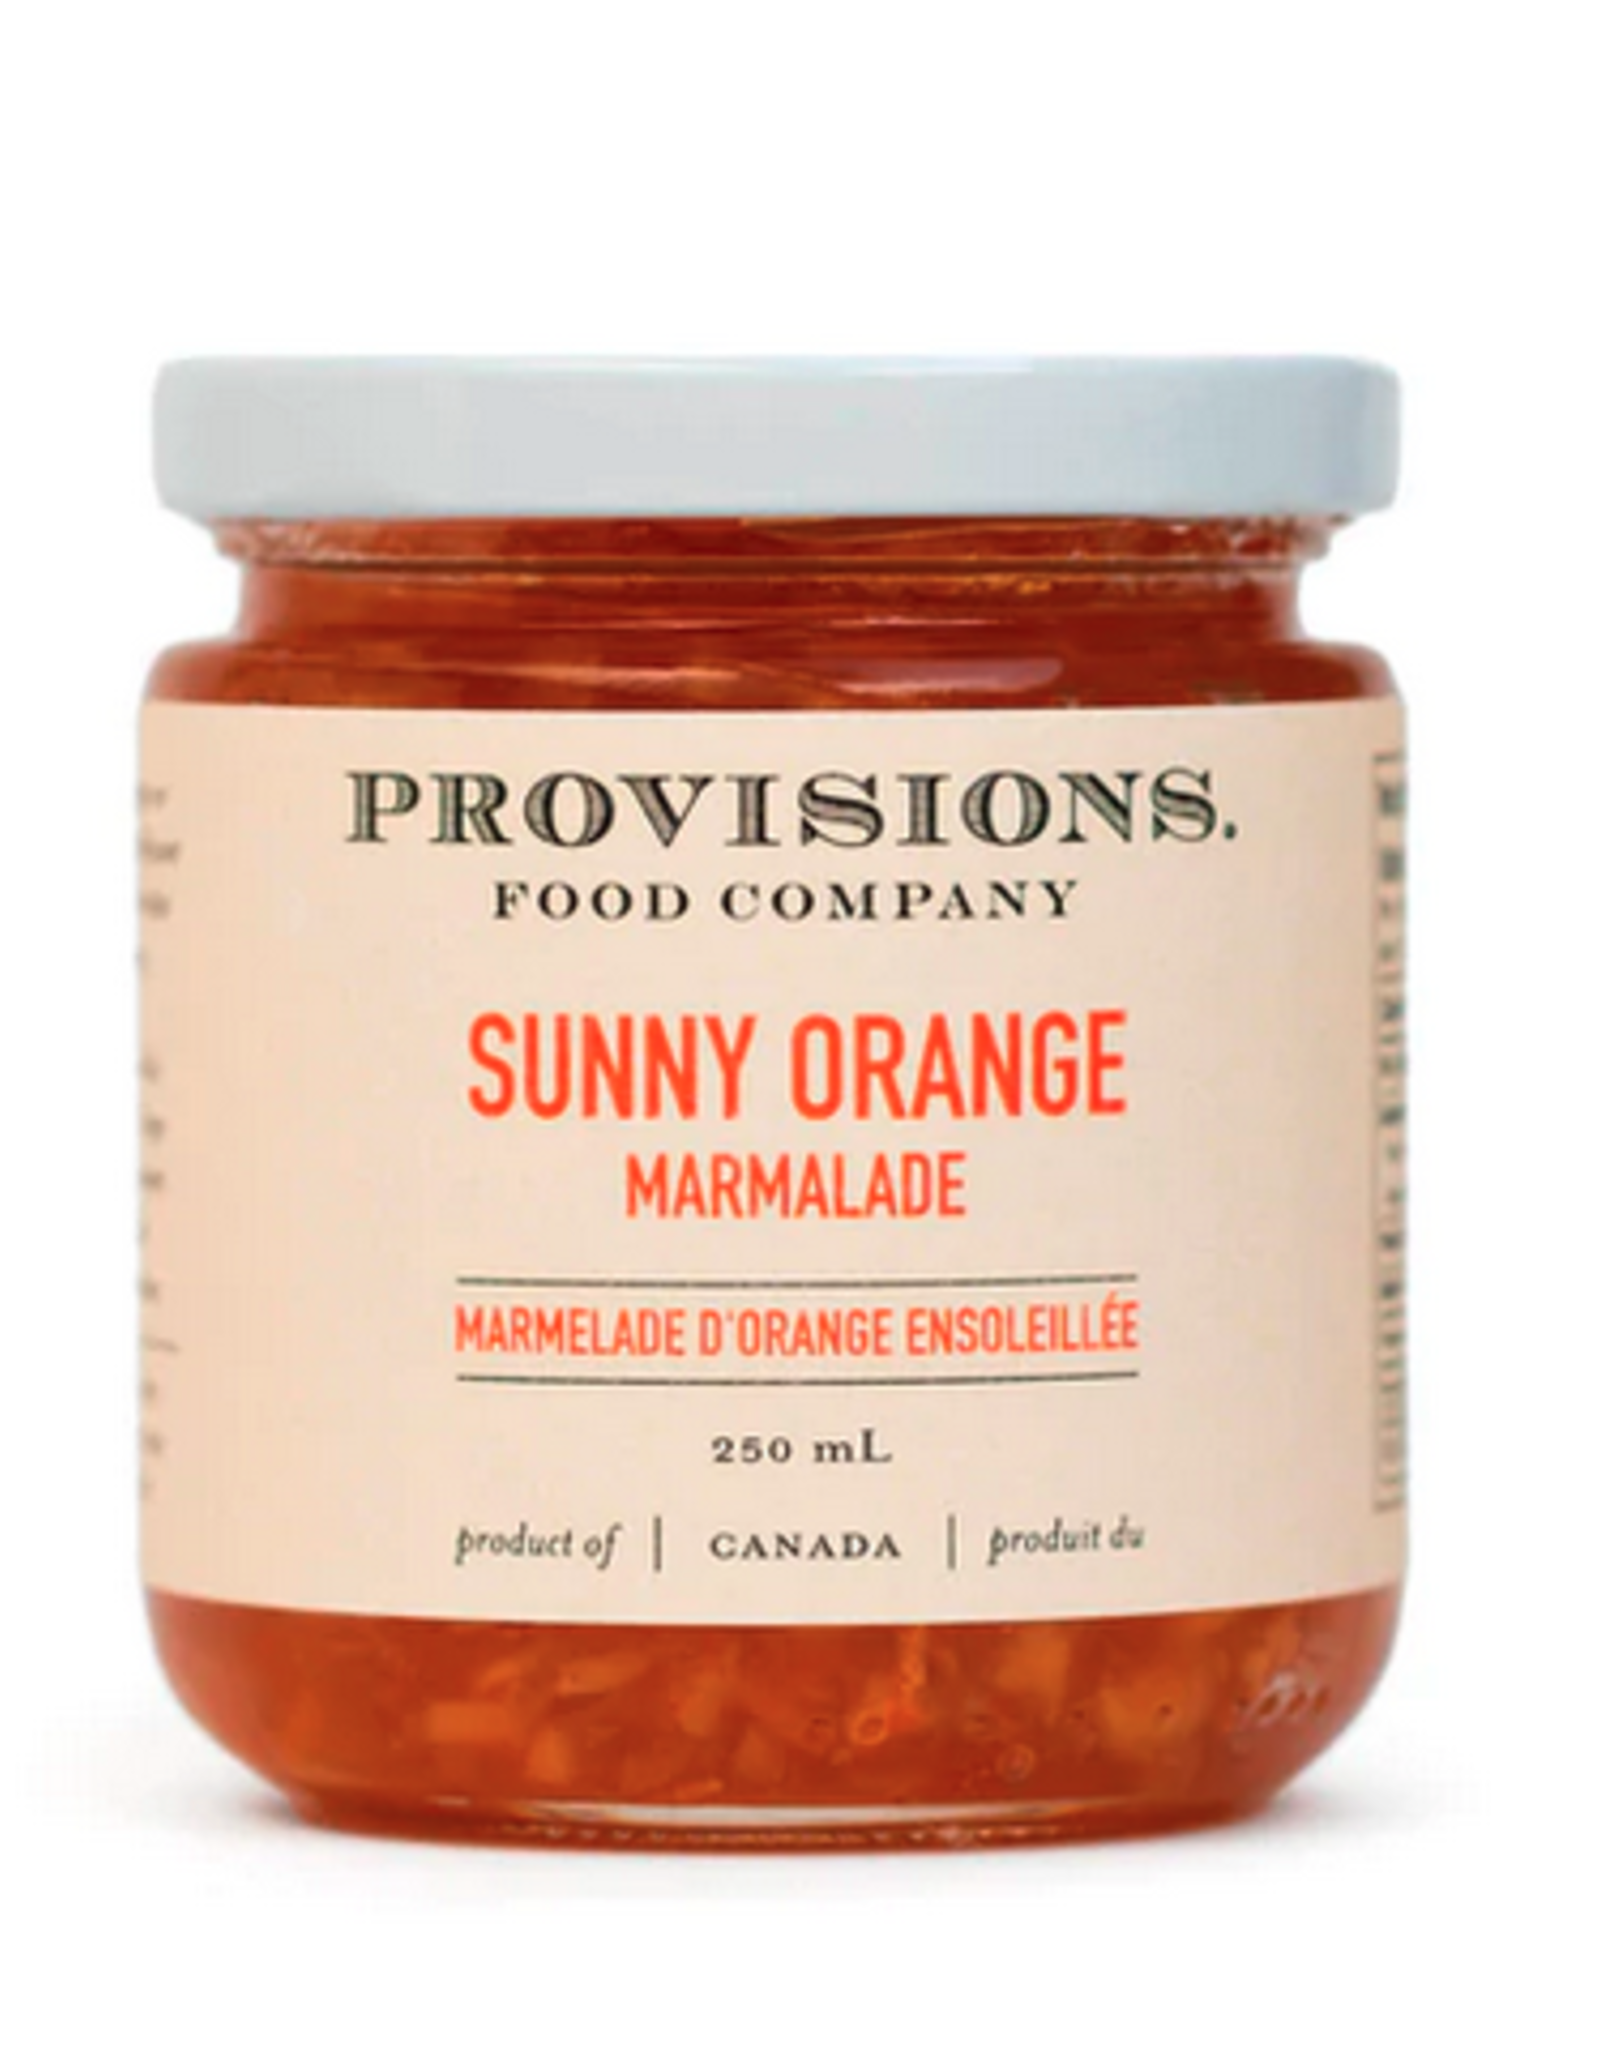 Sunny Orange Marmalade